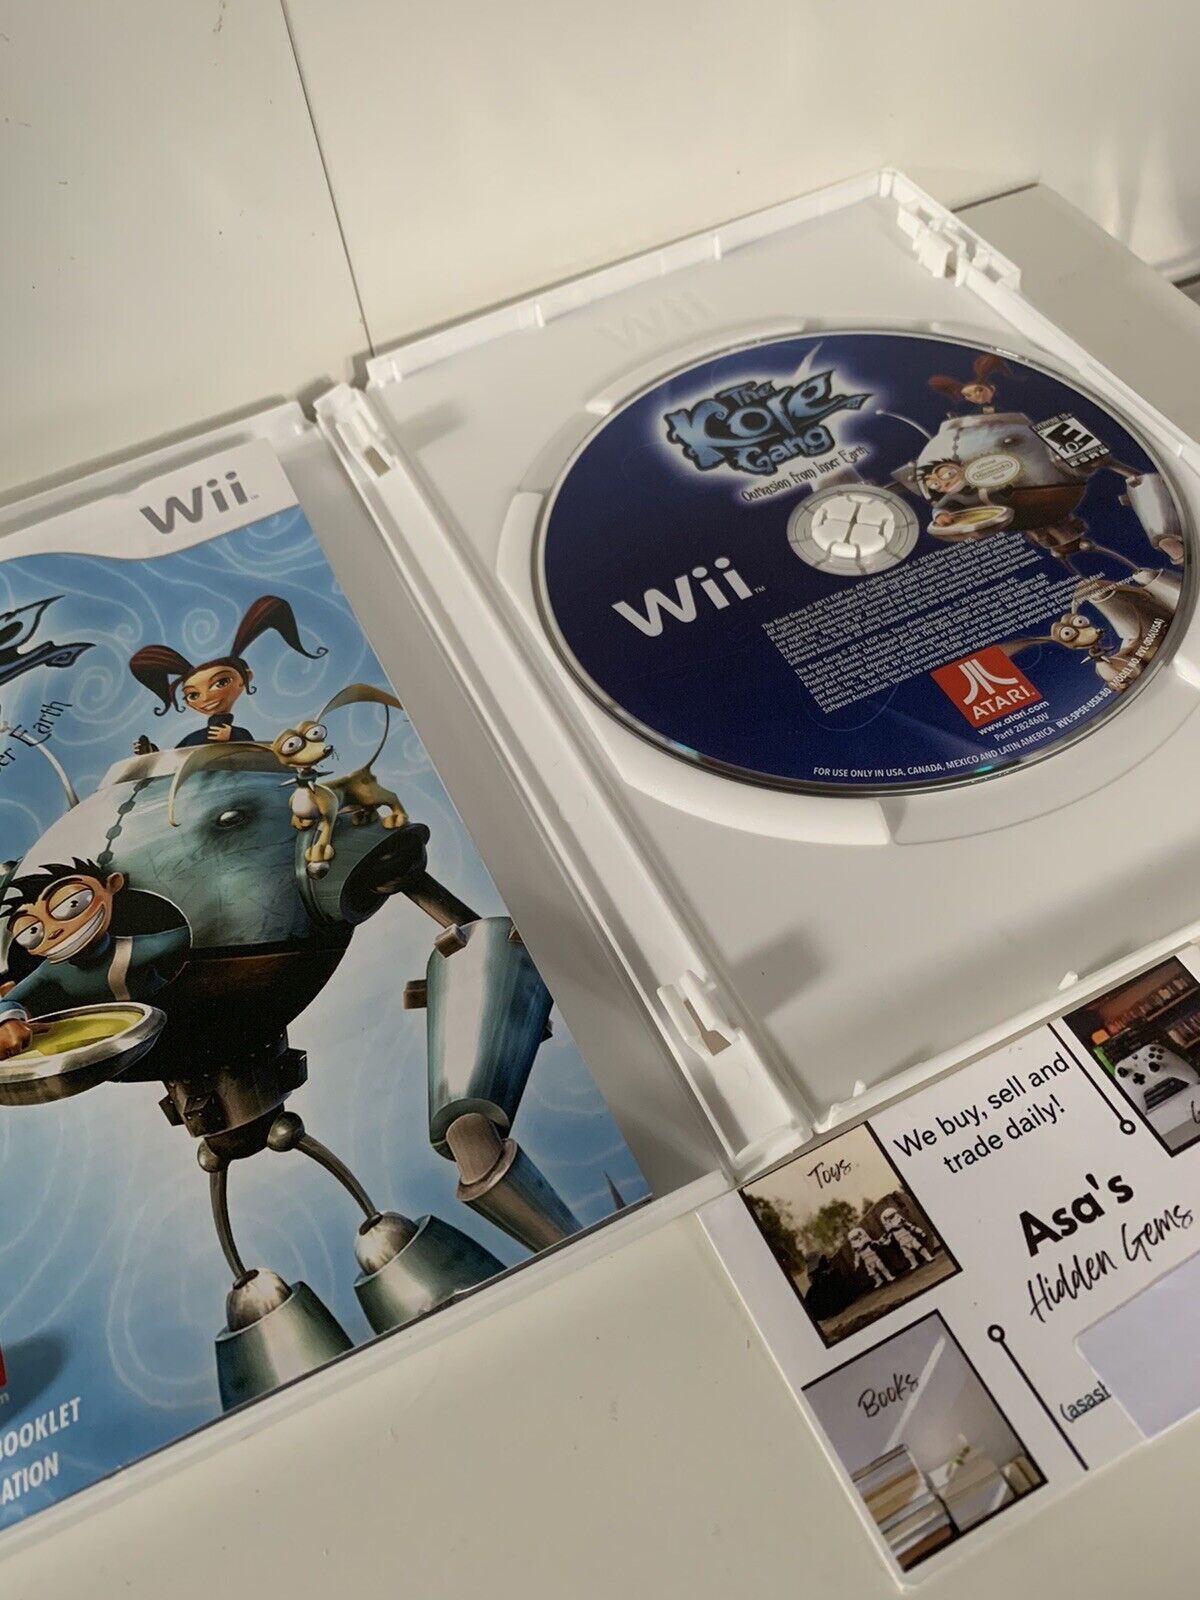 Kore Gang: Outvasion From Inner Earth (Nintendo Wii, 2011)